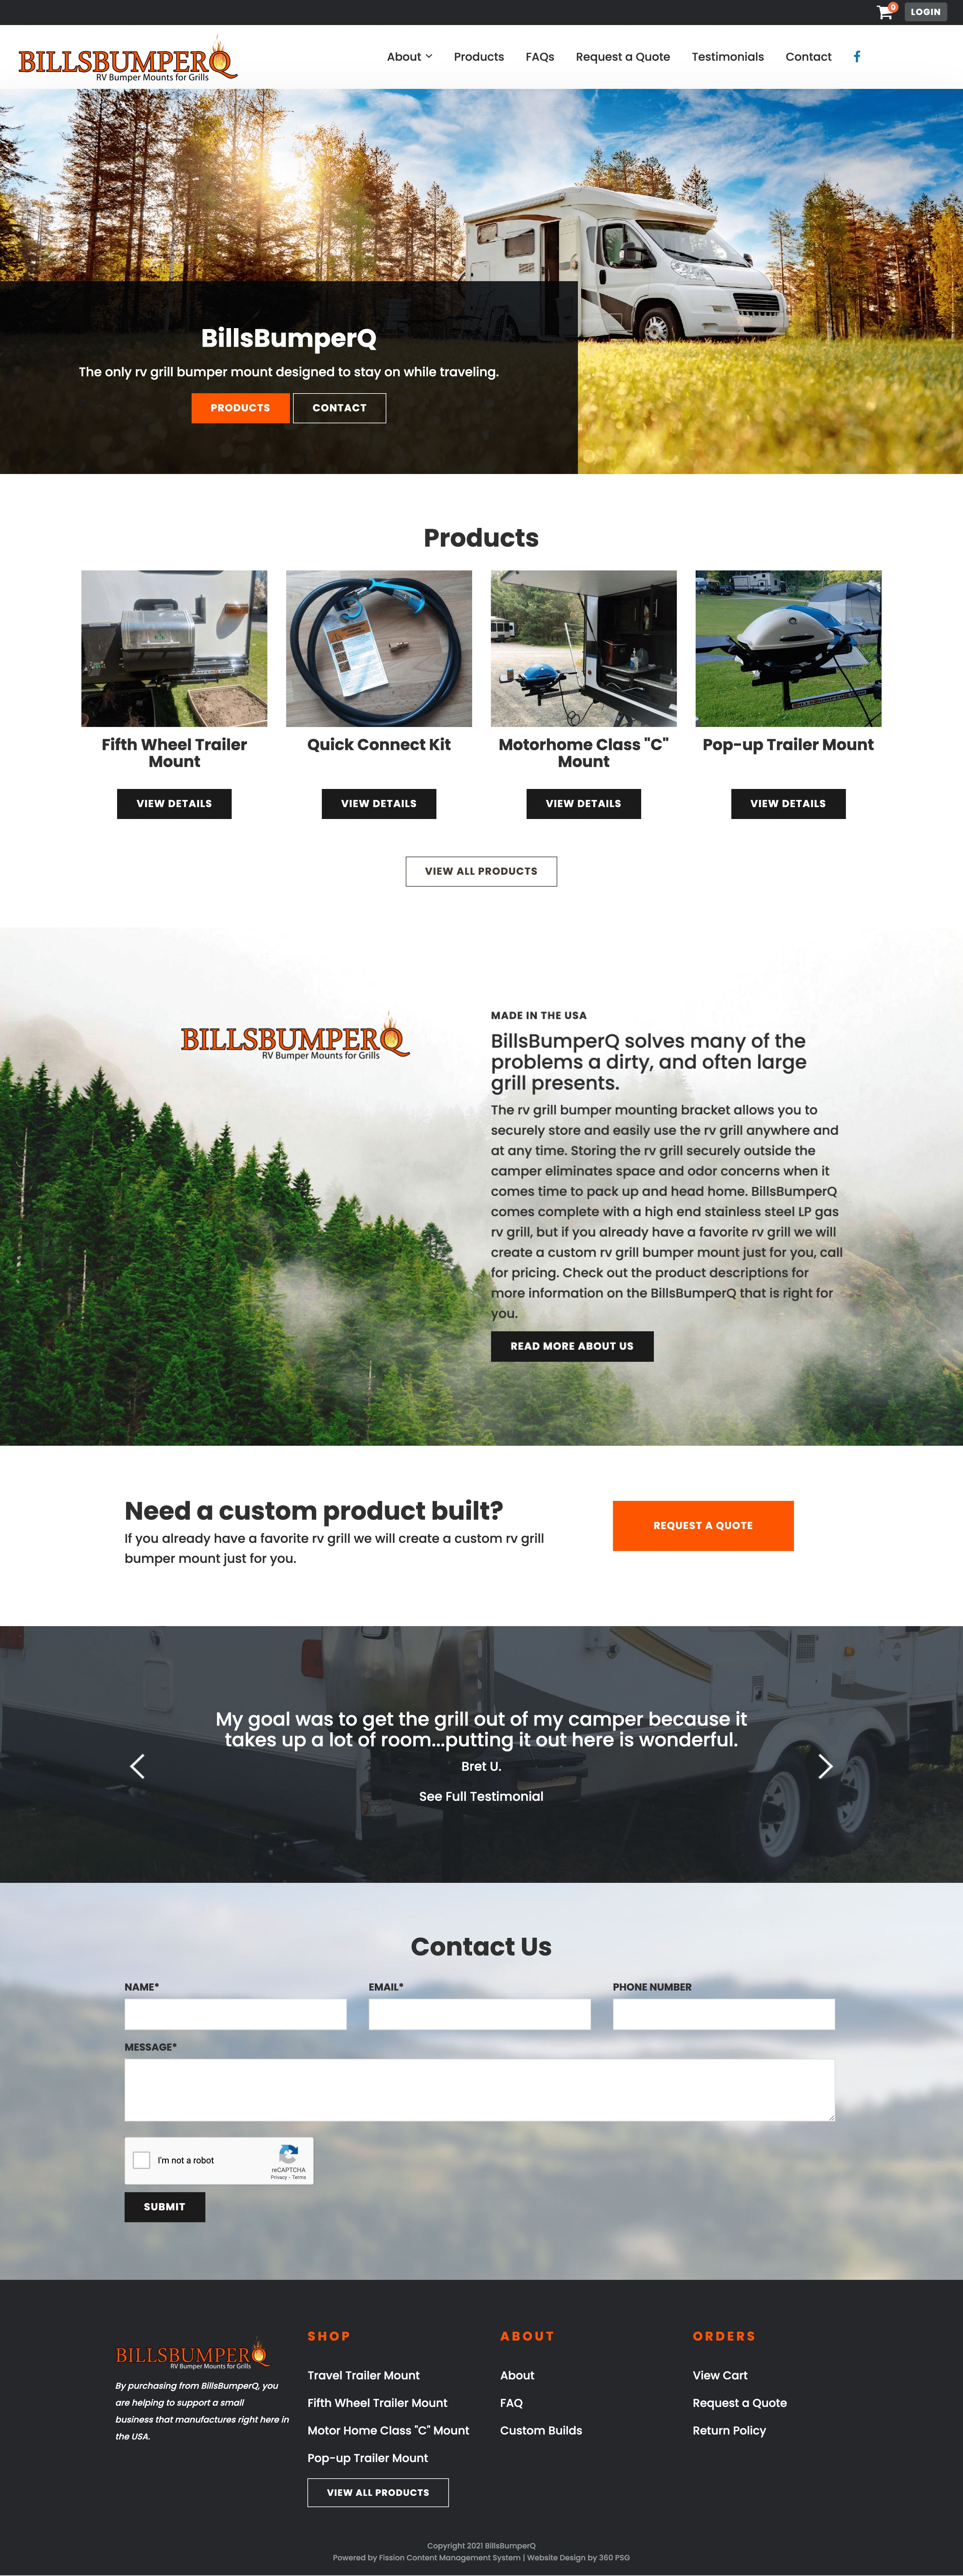 BillsBumperQ Website - Desktop